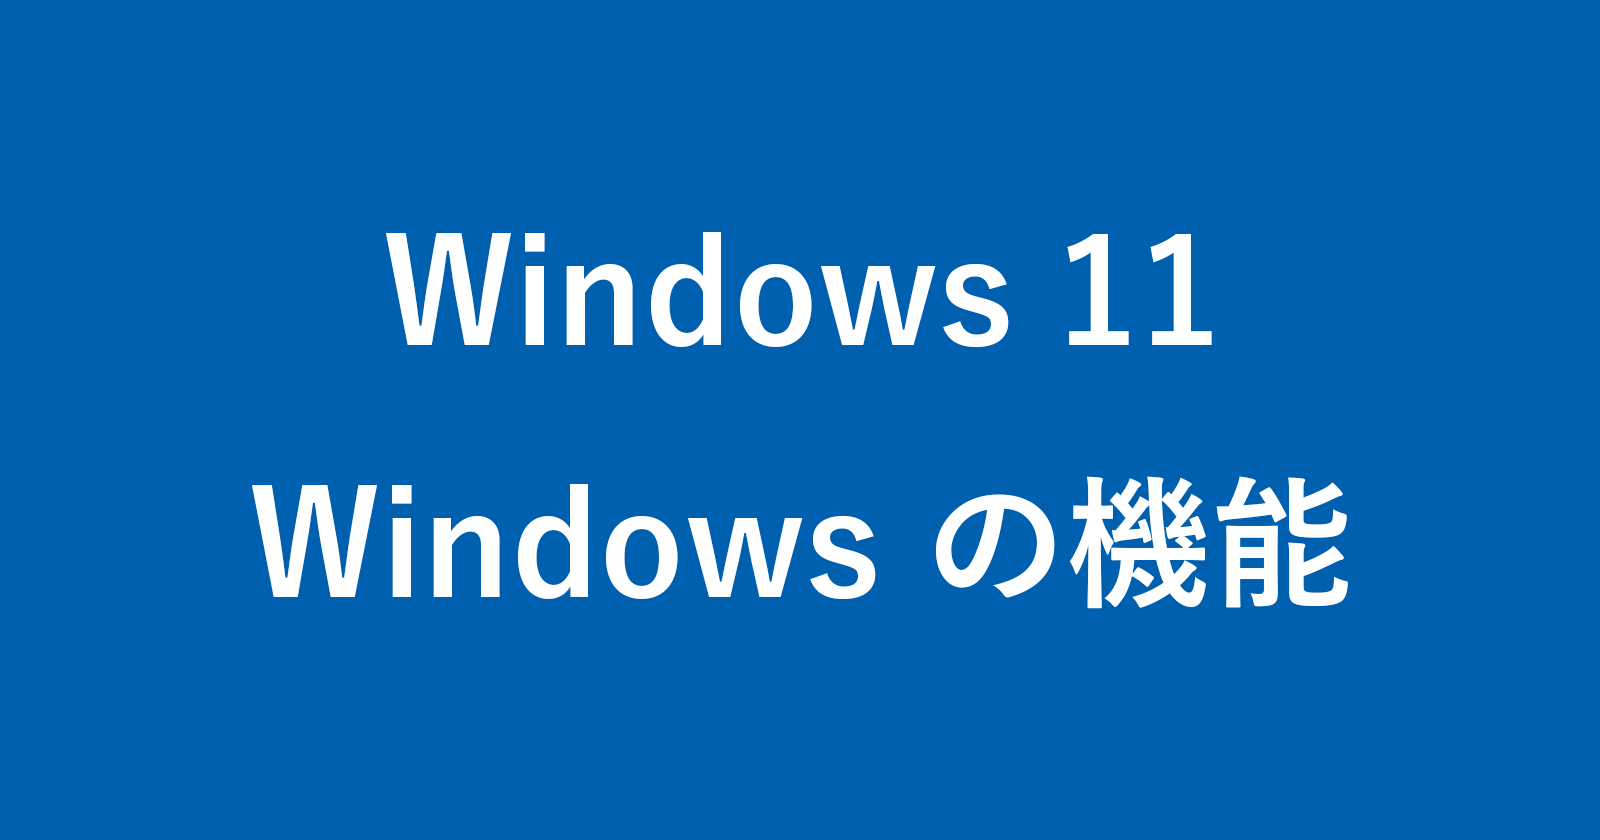 windows 11 windows features